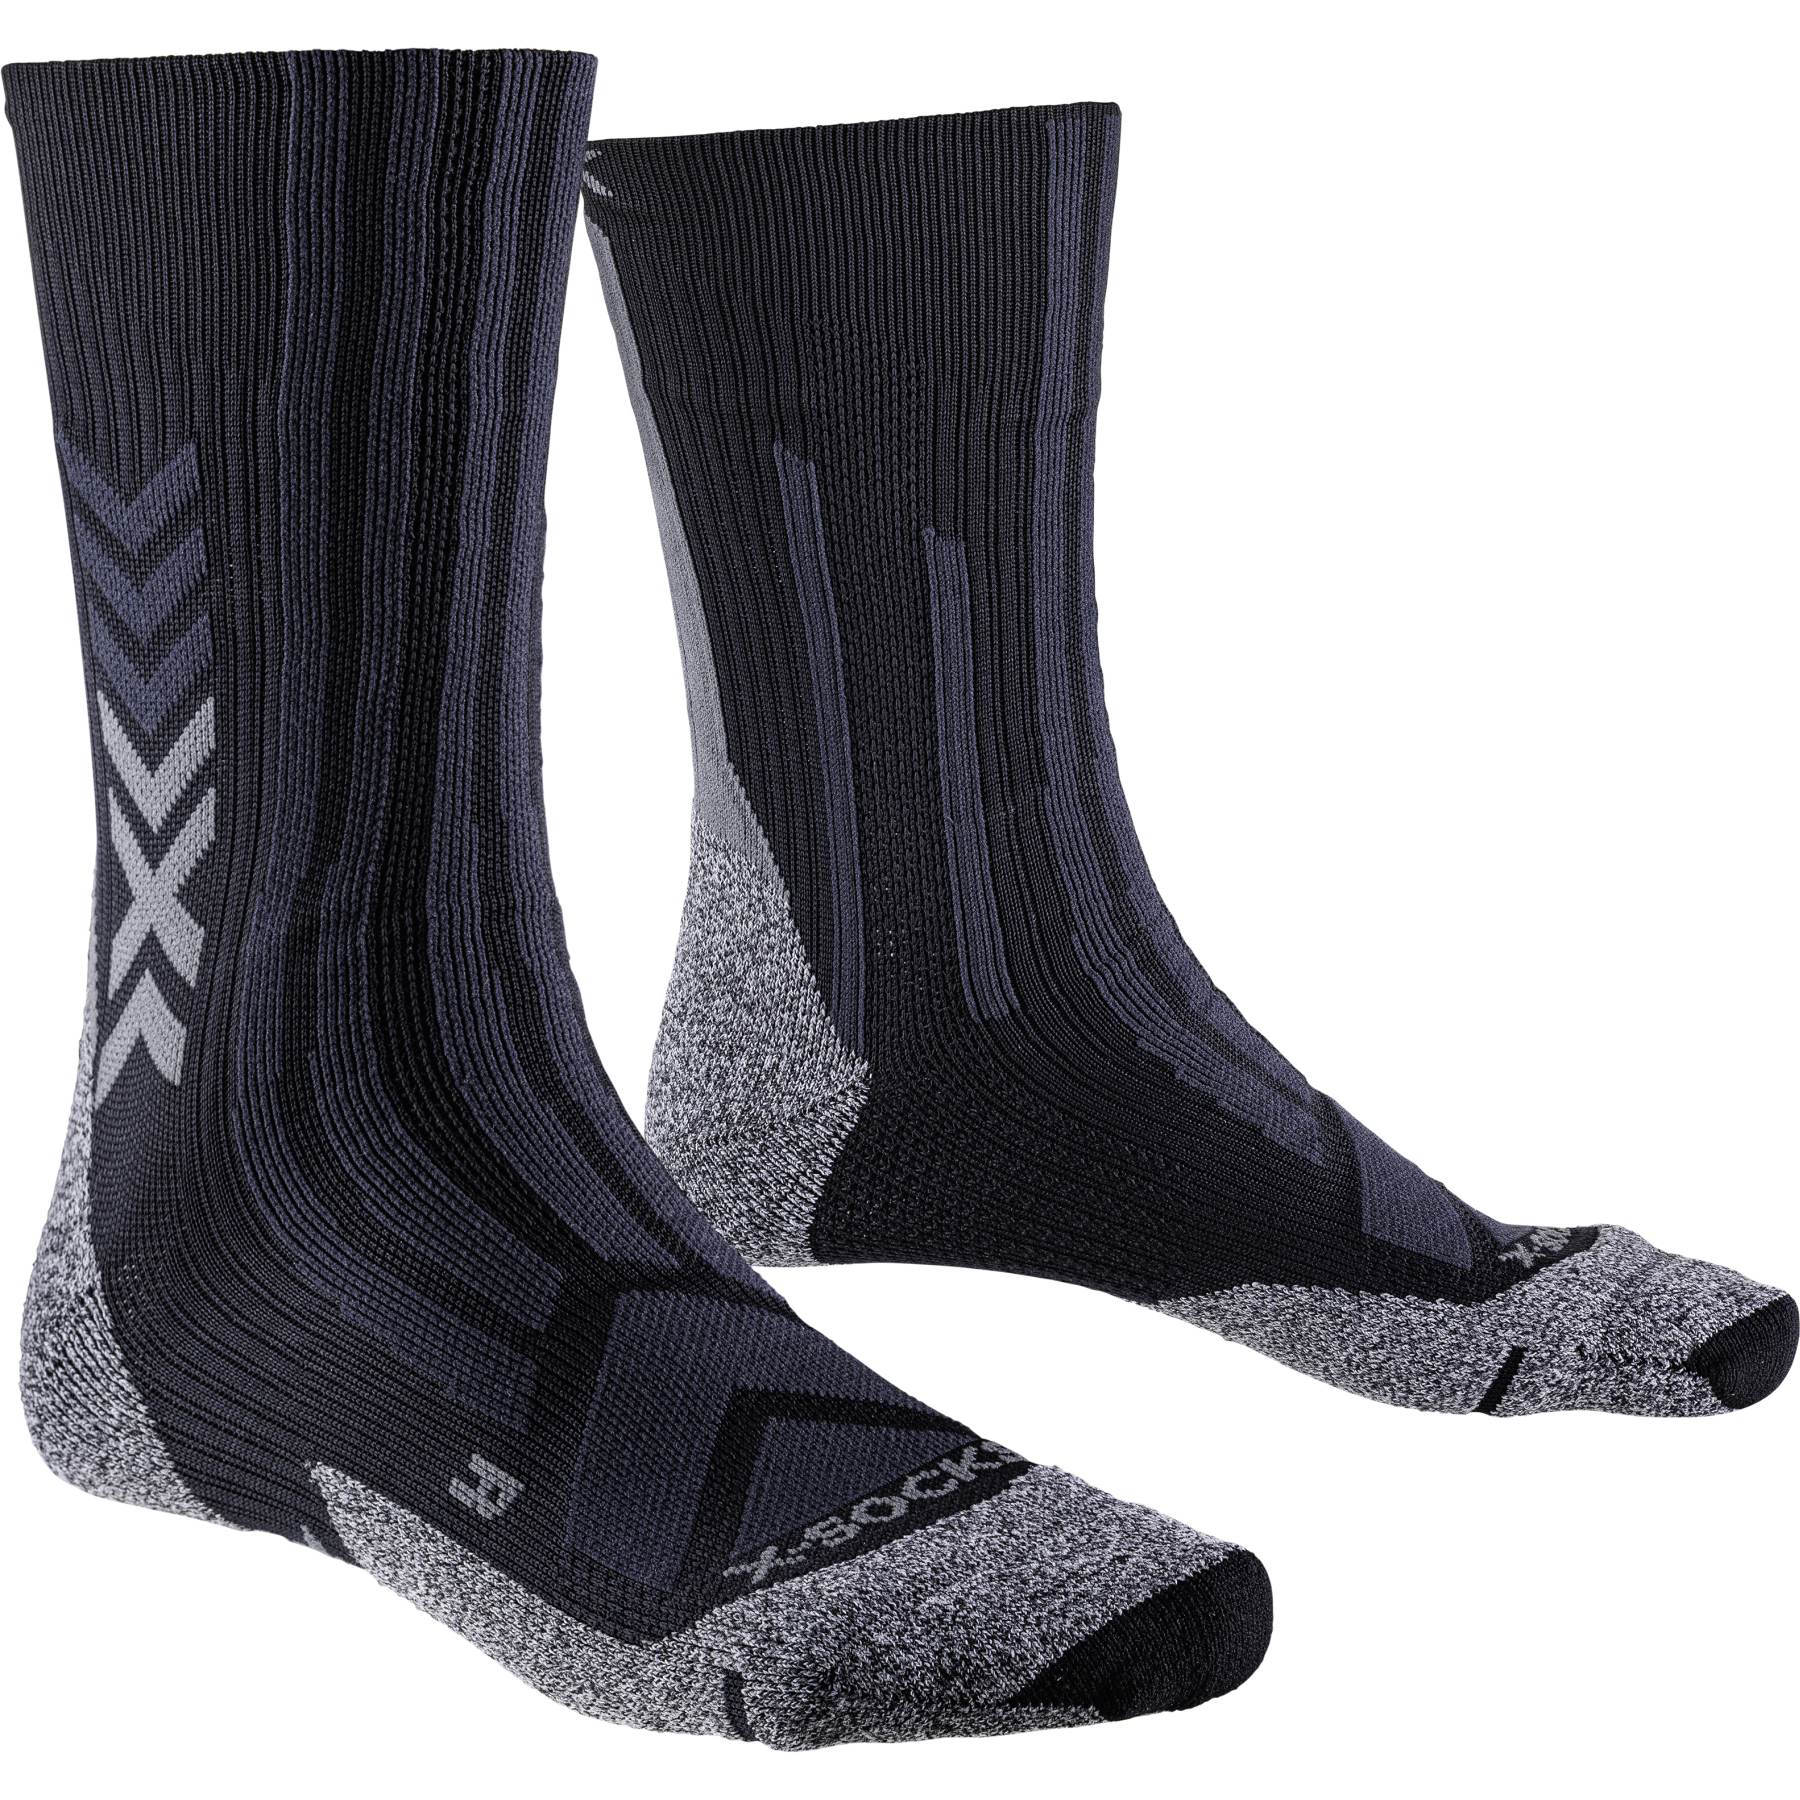 Produktbild von X-Socks Trekking Perform Dual Layer Crew Socken - black/charcoal